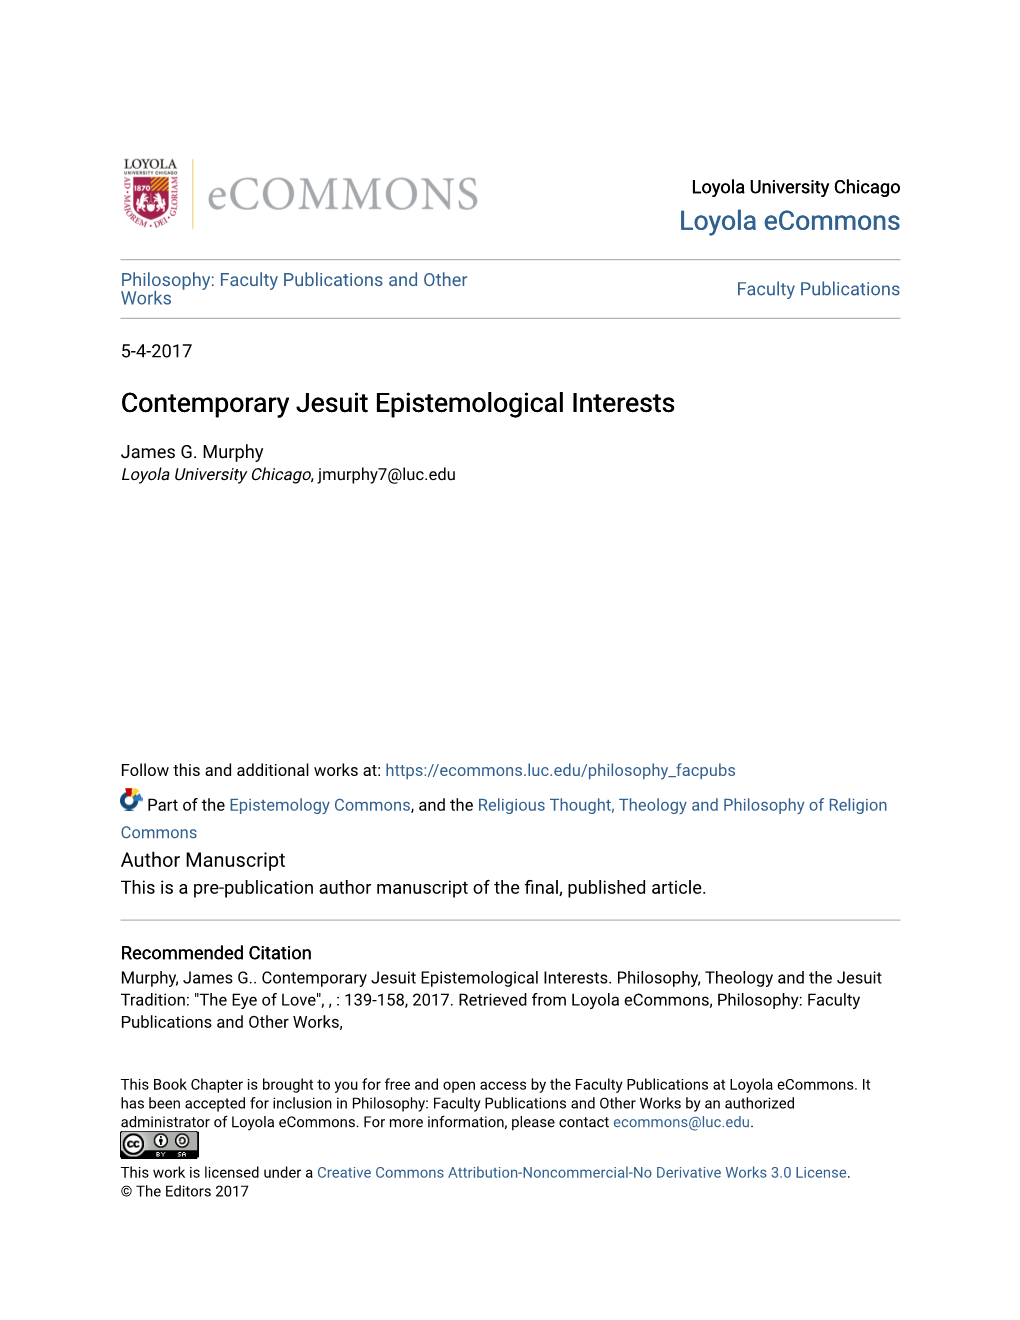 Contemporary Jesuit Epistemological Interests